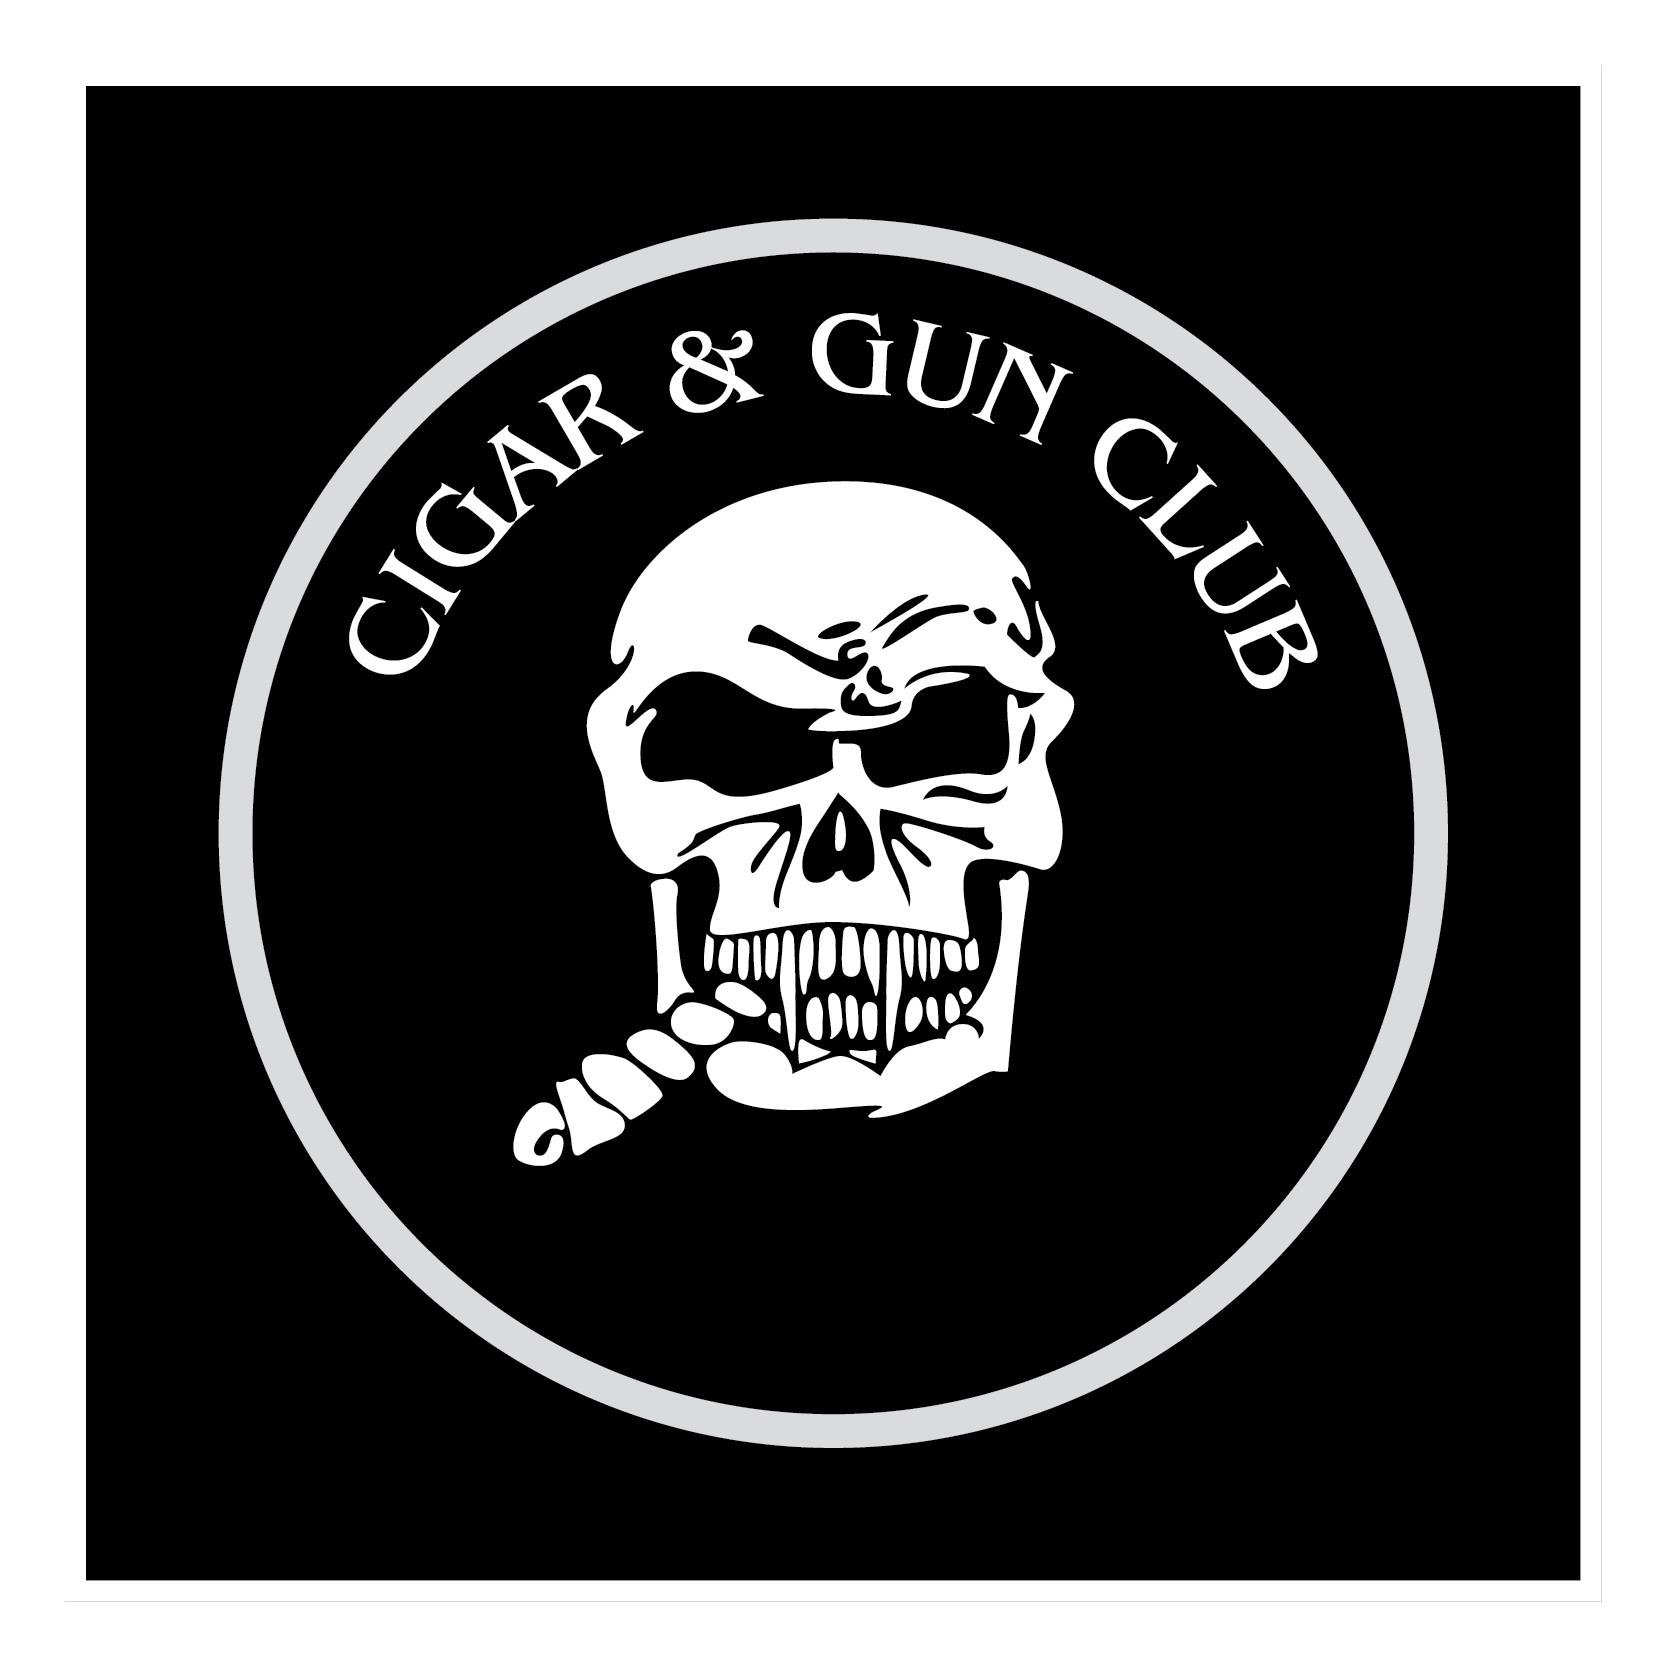 Cigar & Gun Club,we smoke cigars, drink booze, shoot guns and love bacon.